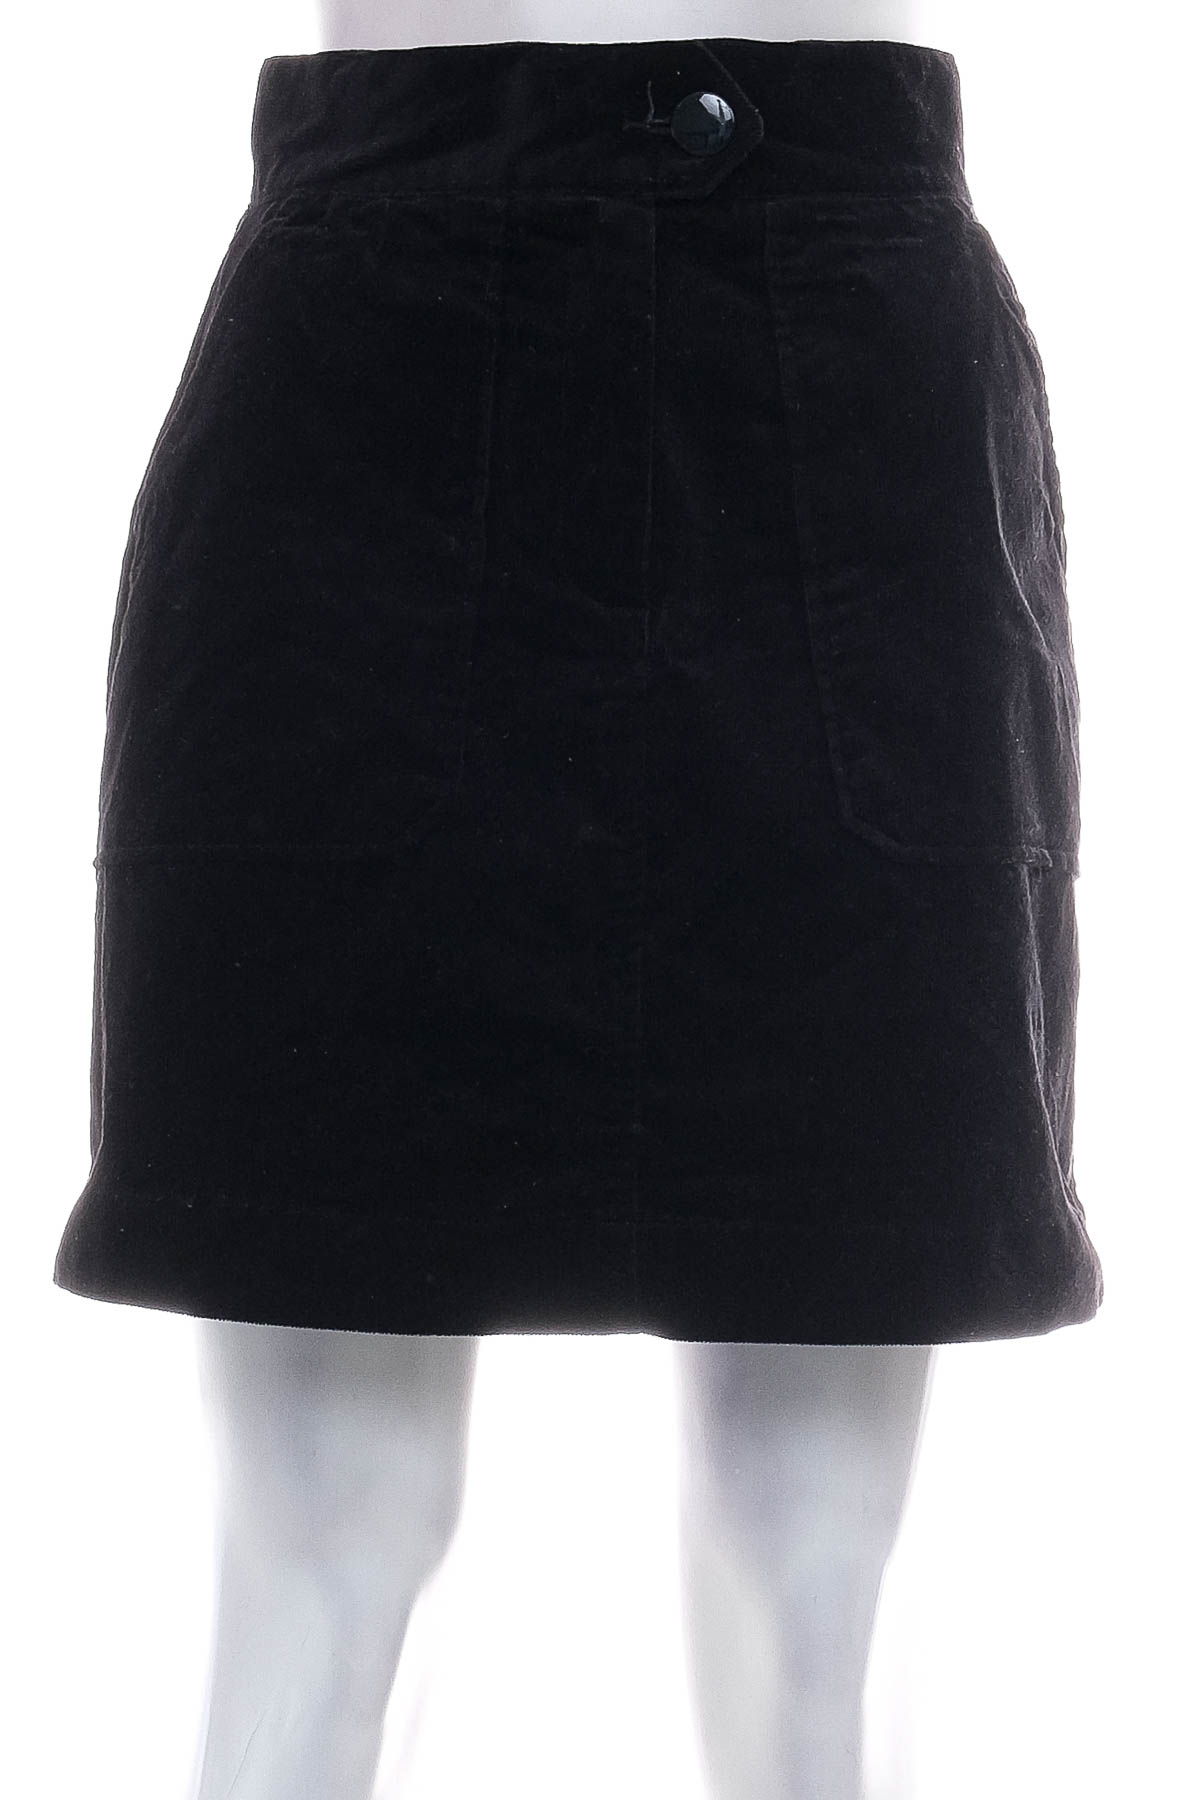 Skirt - LA REDOUTE - 0